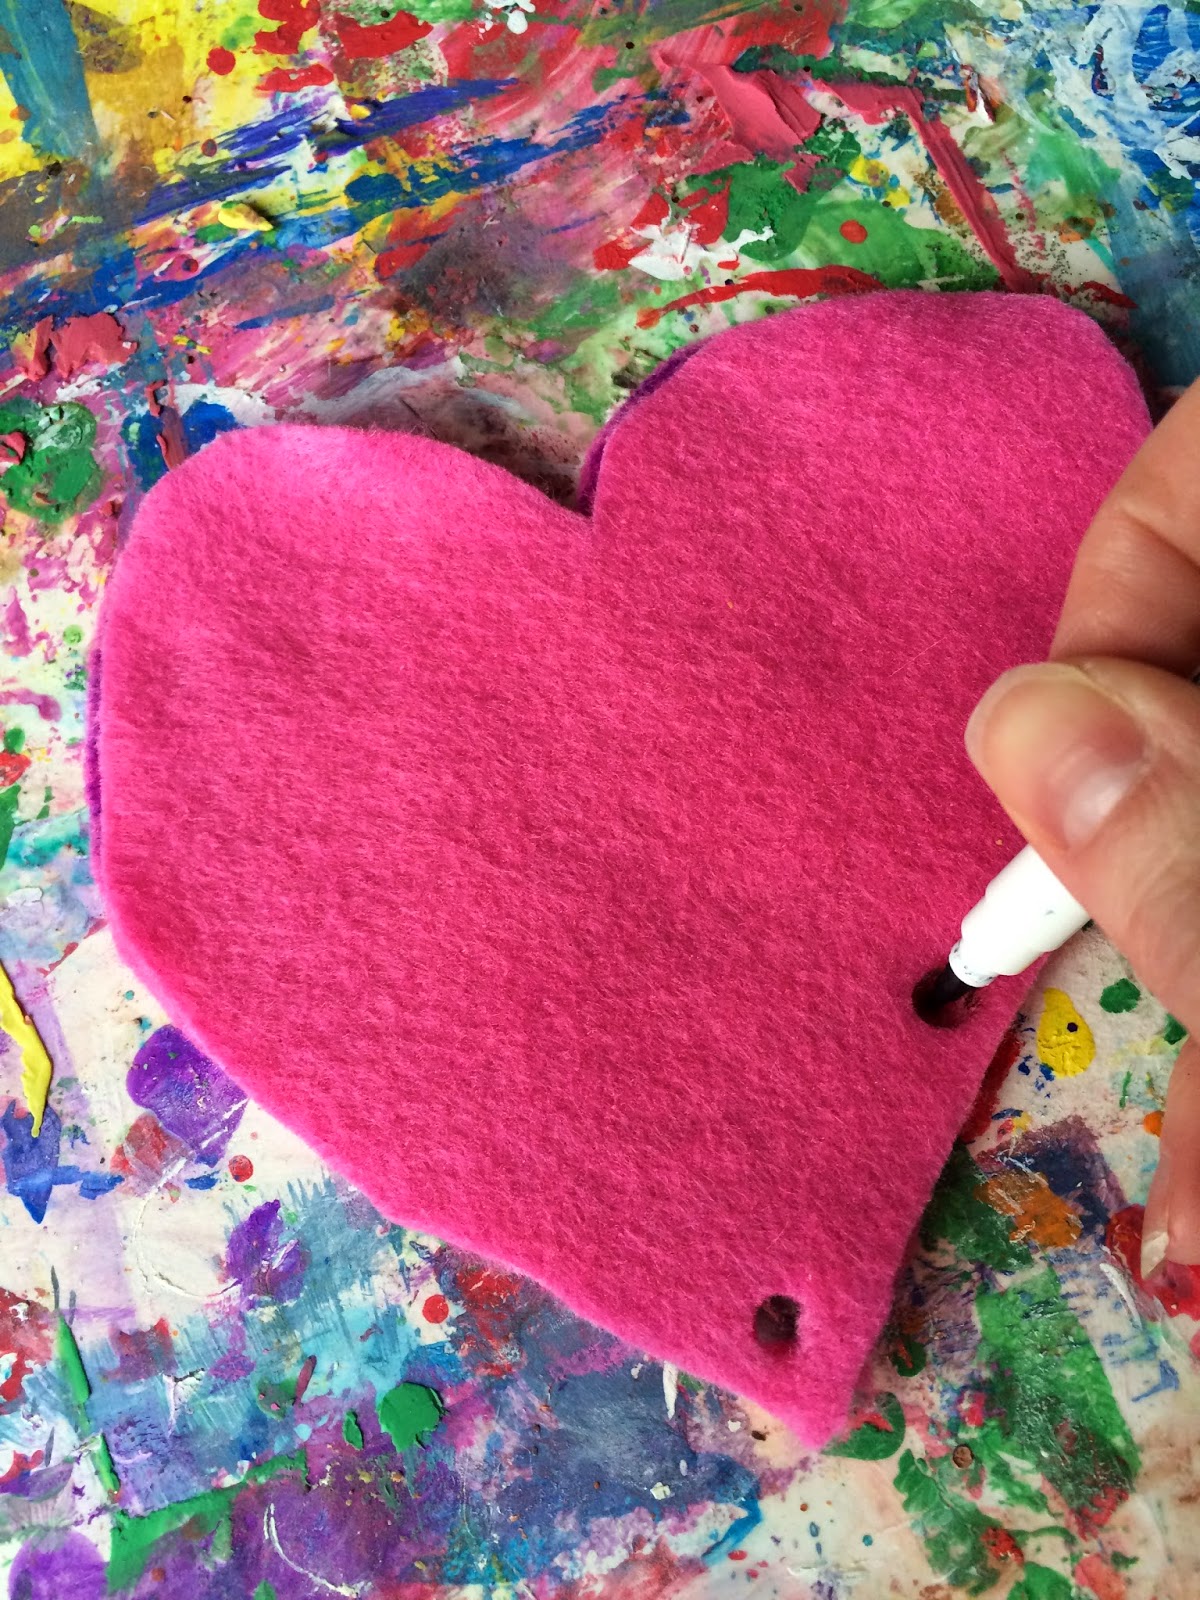 Heart crafts